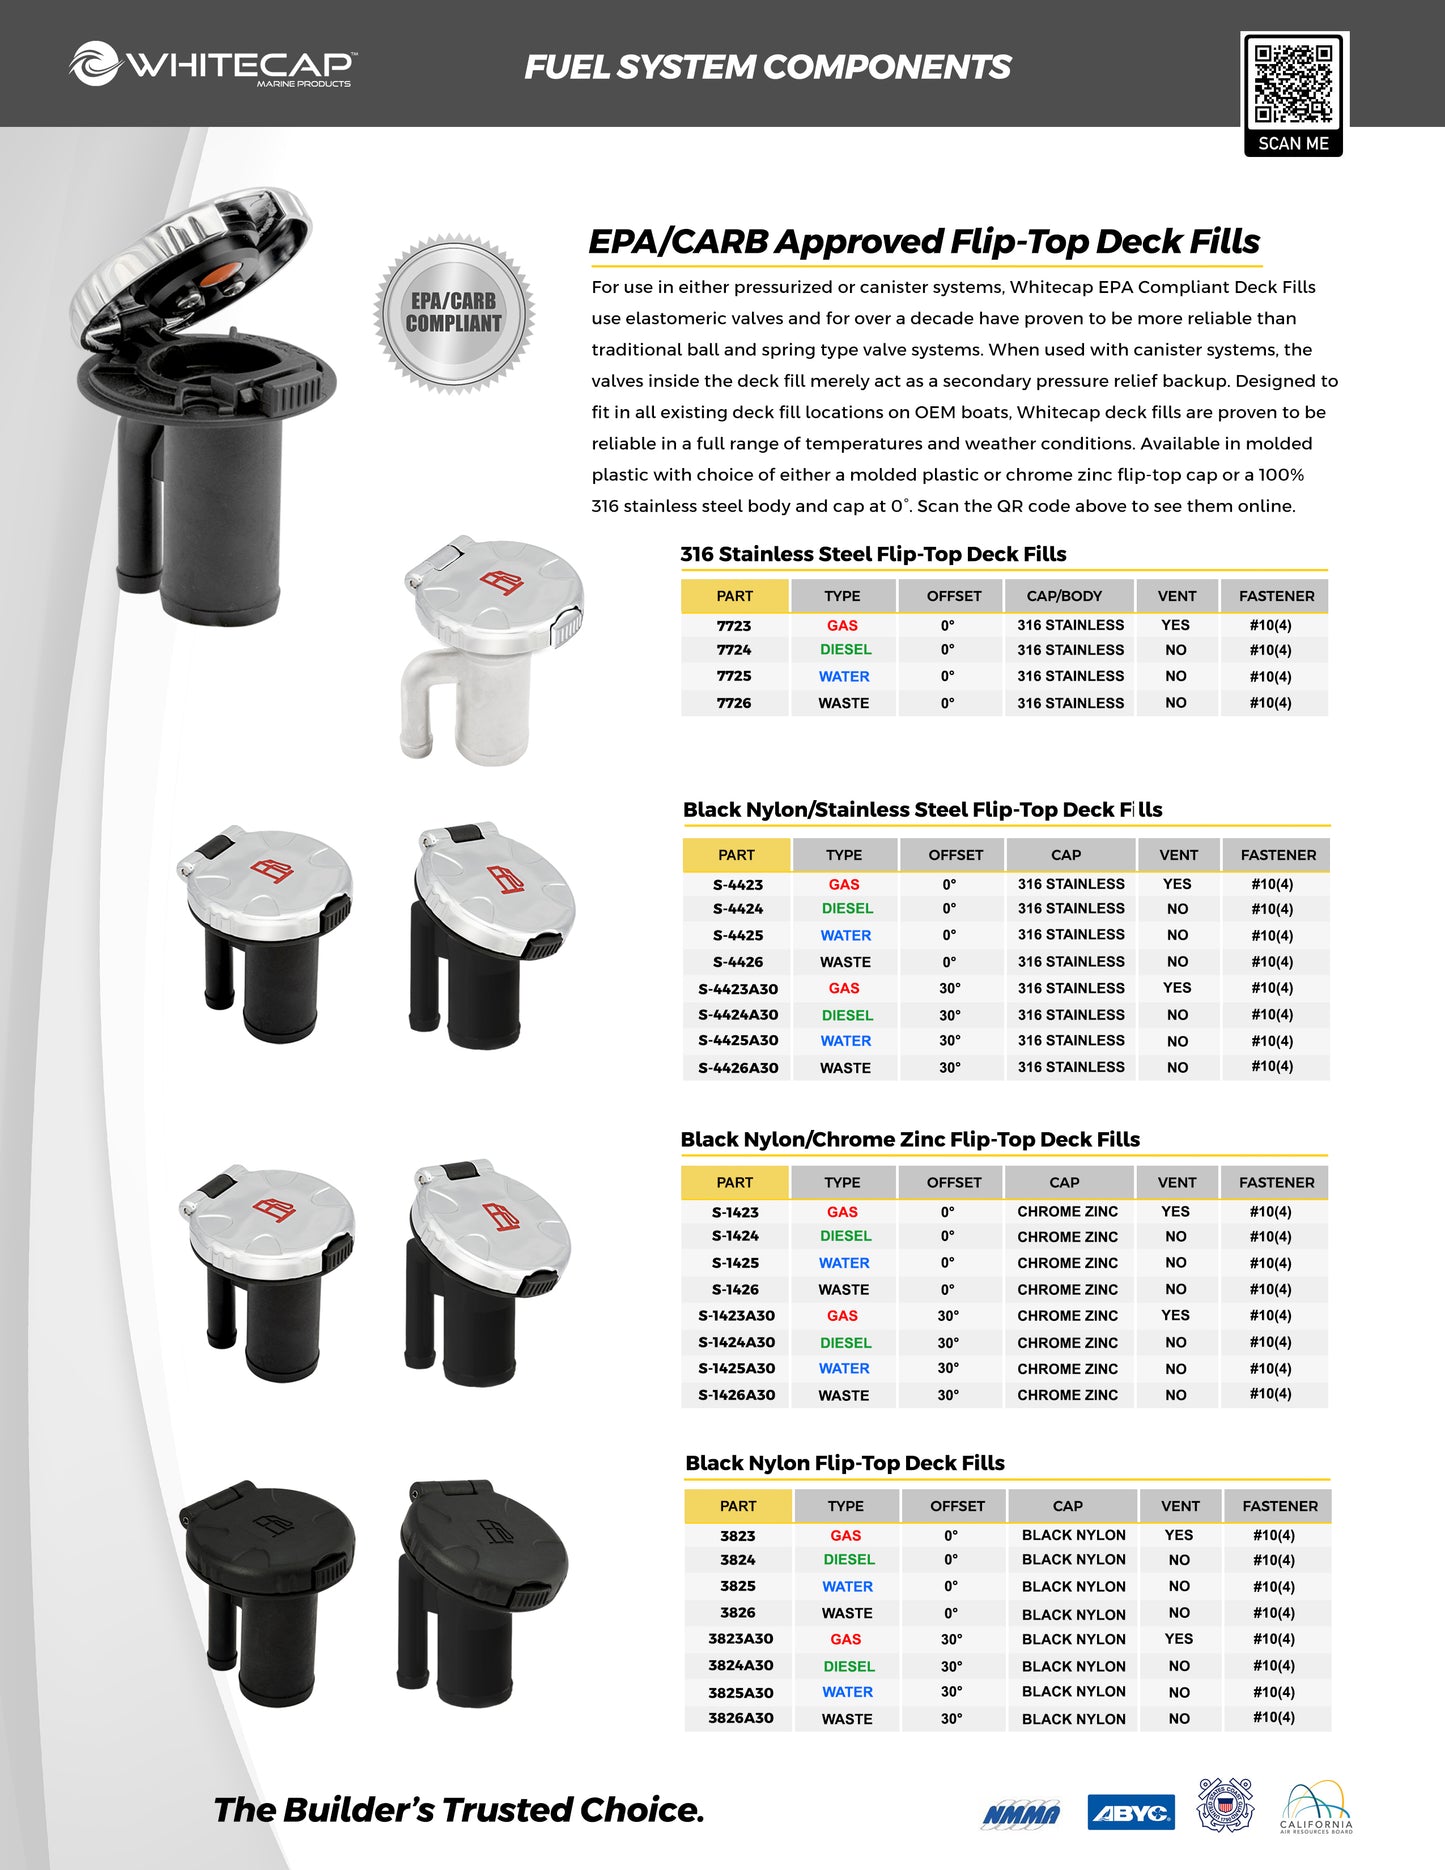 EPA/CARB Flip Top Pressurized Deck Fill - Water